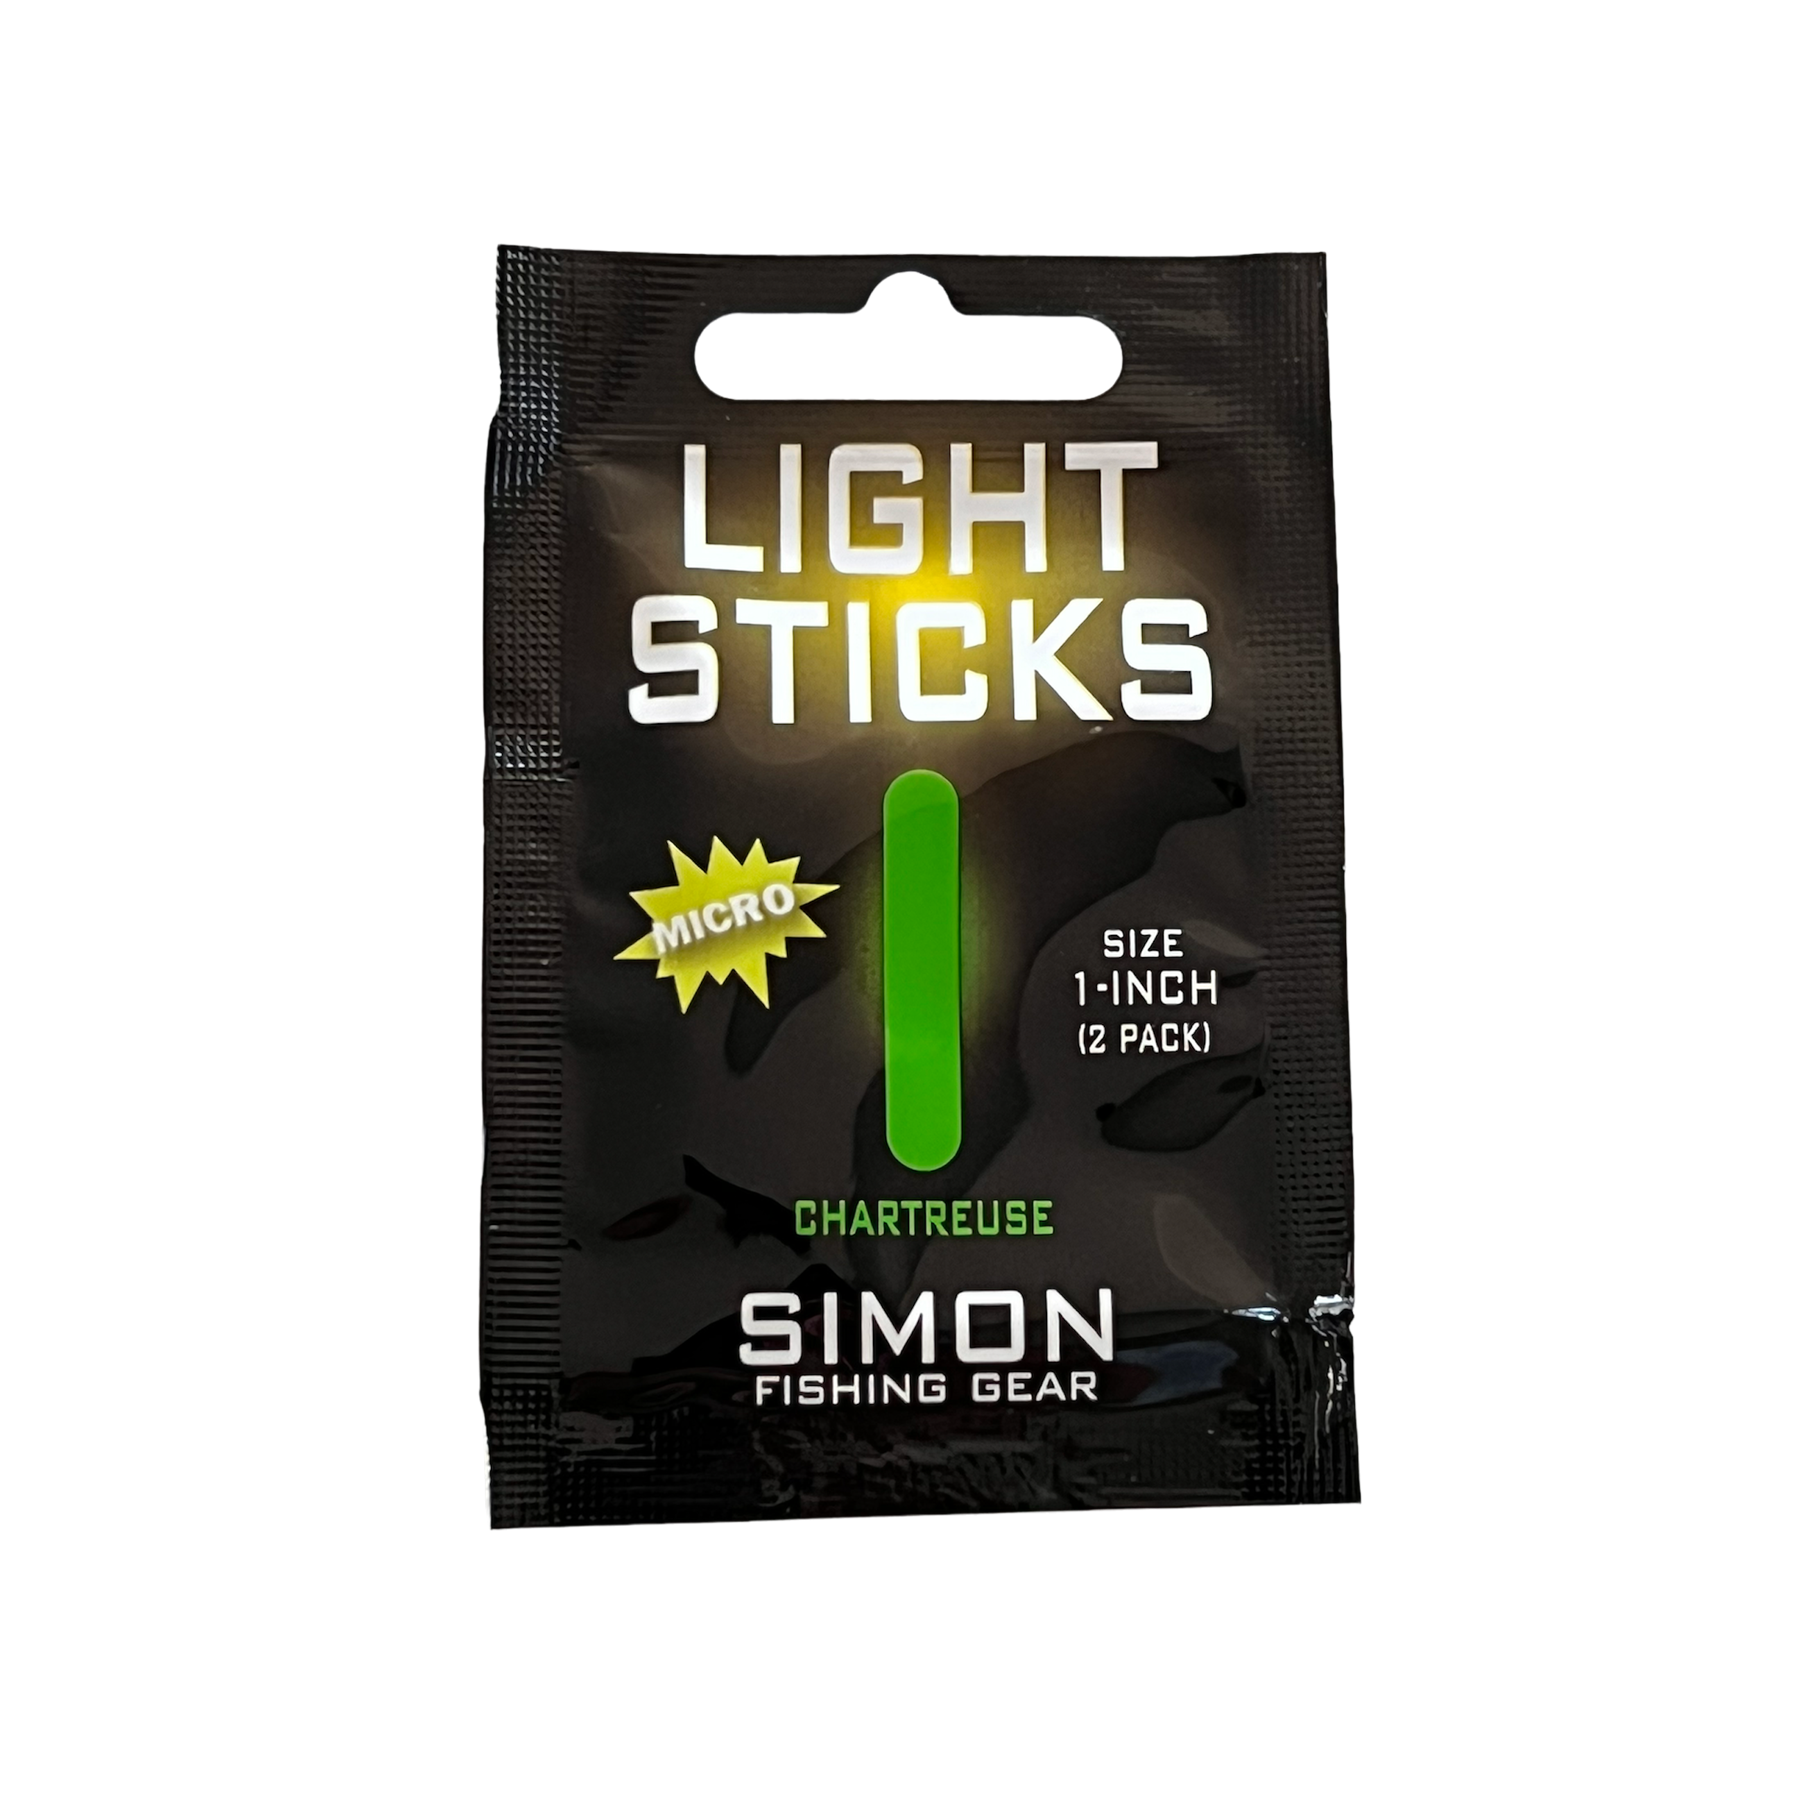 SIMON REPLACEMENT LIGHT STICKS